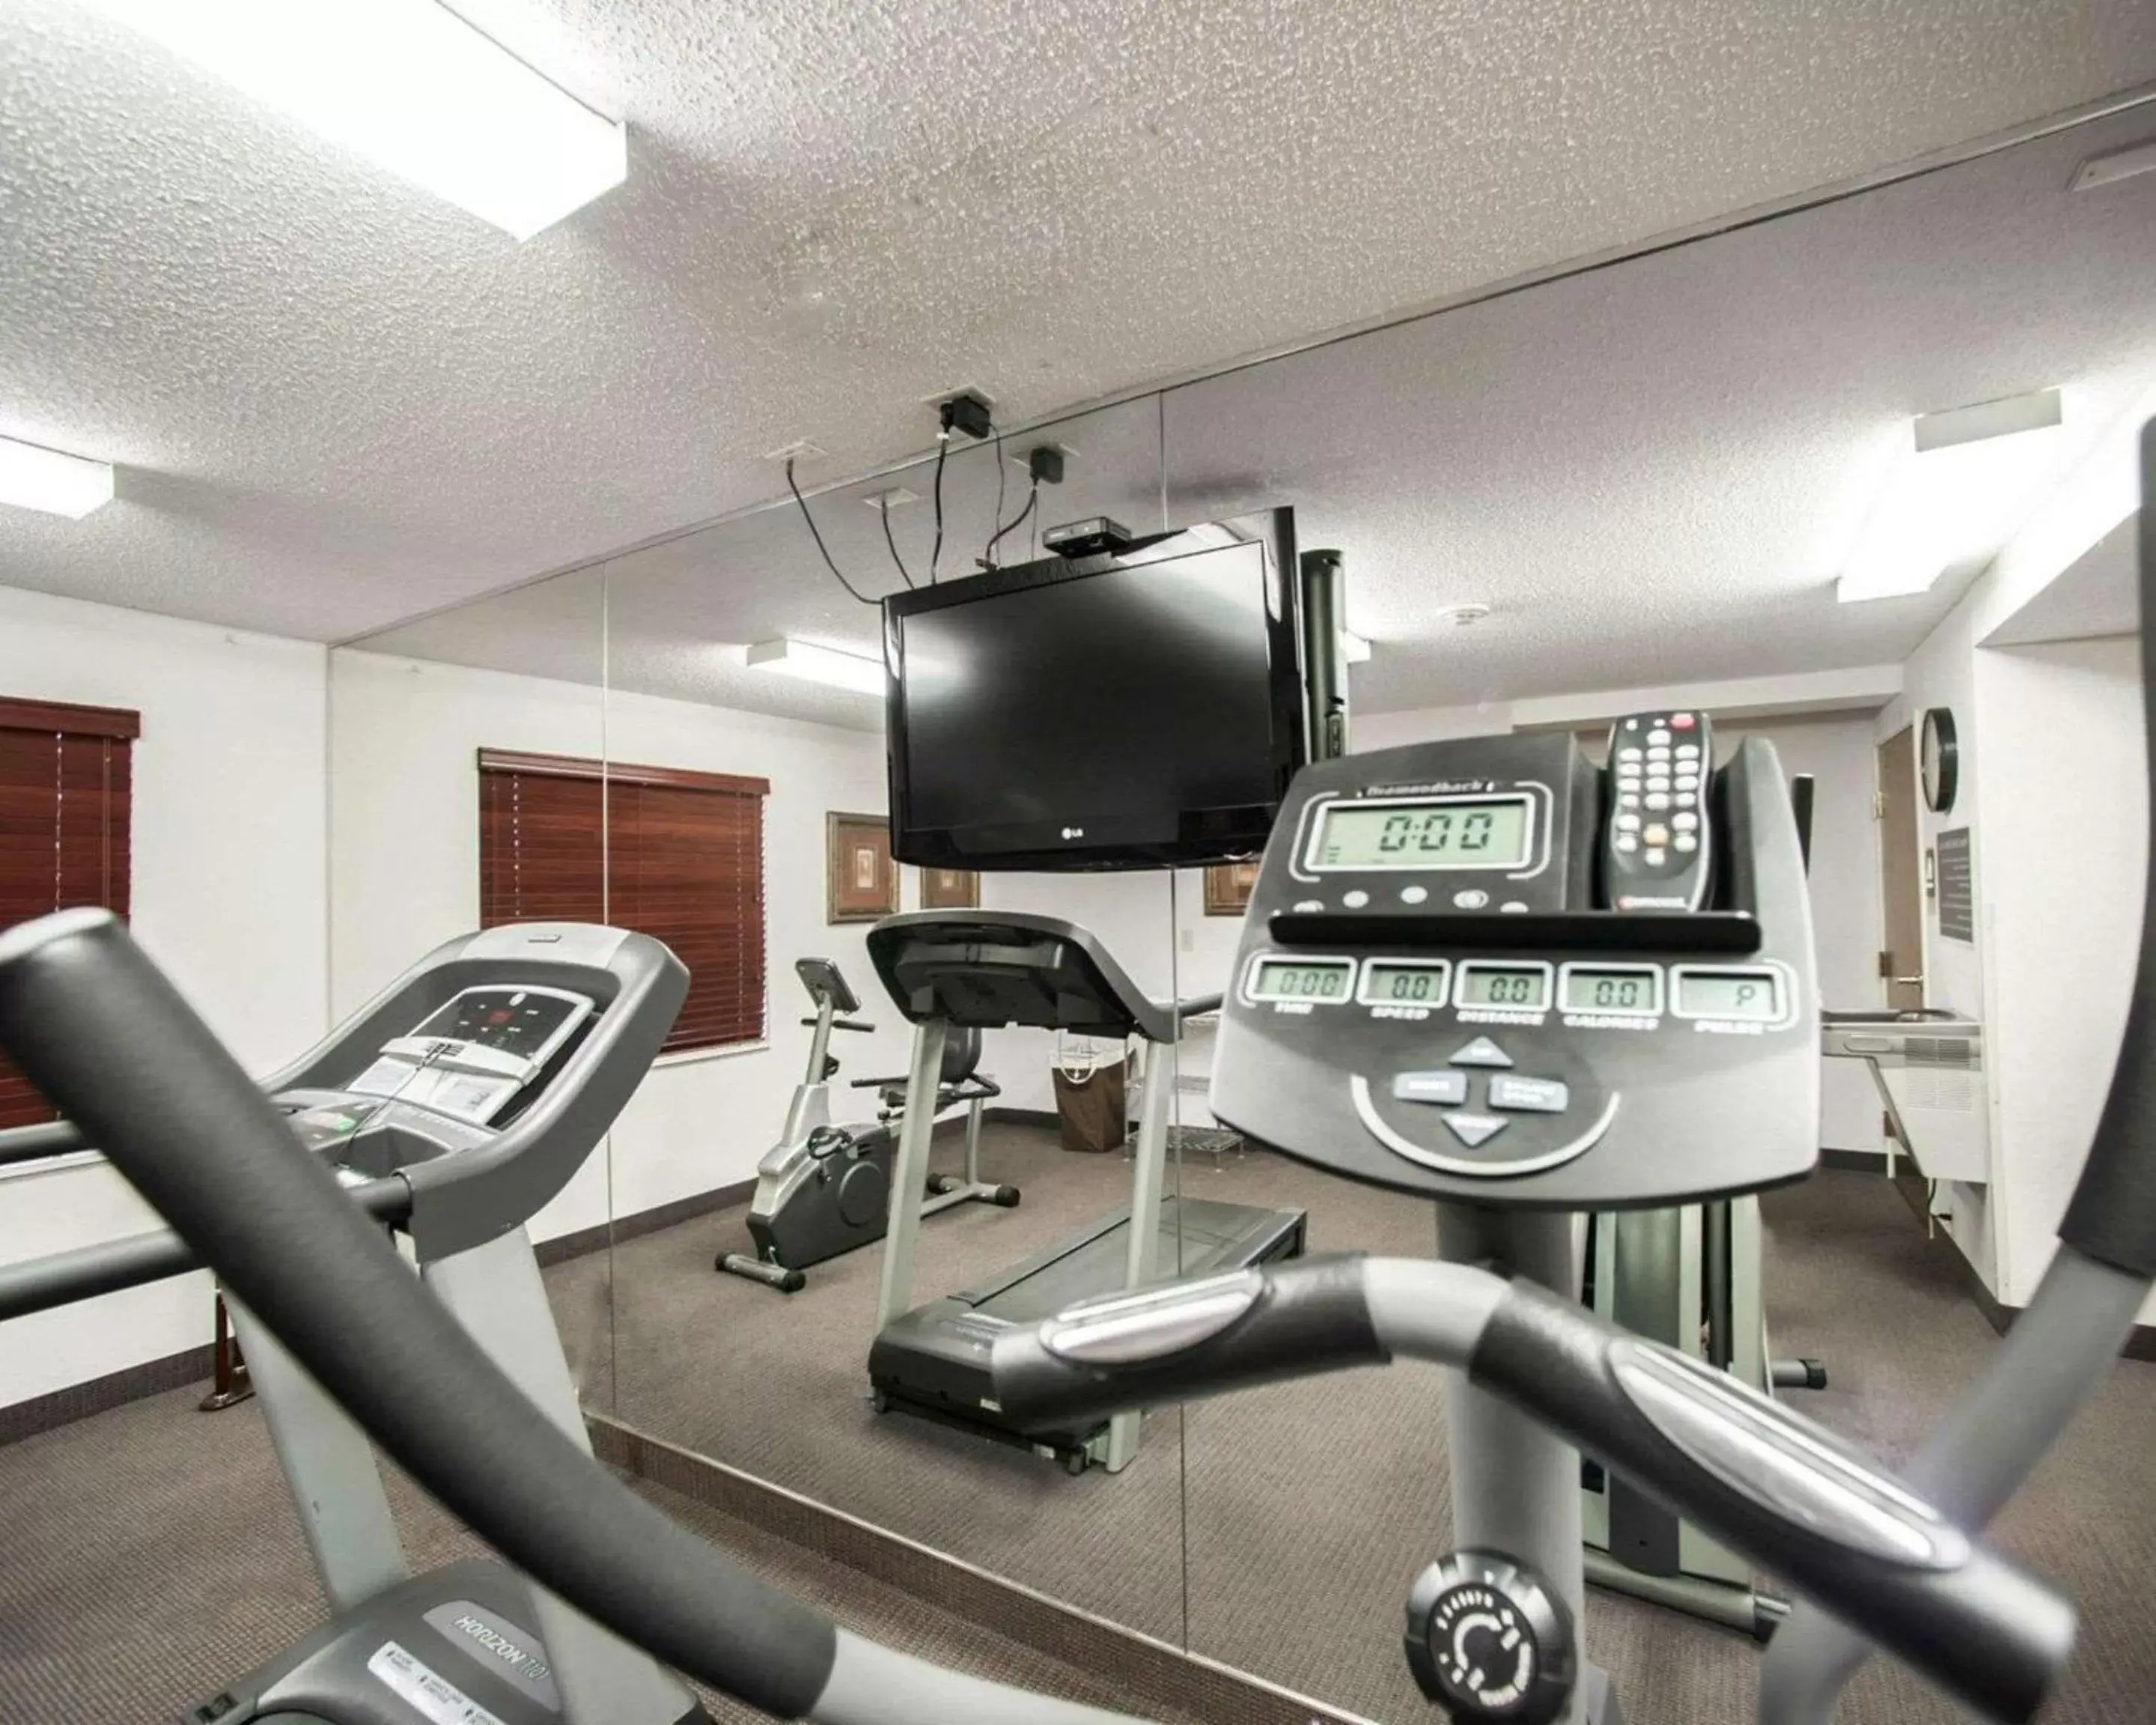 Fitness centre/facilities, Fitness Center/Facilities in Sleep Inn Murfreesboro